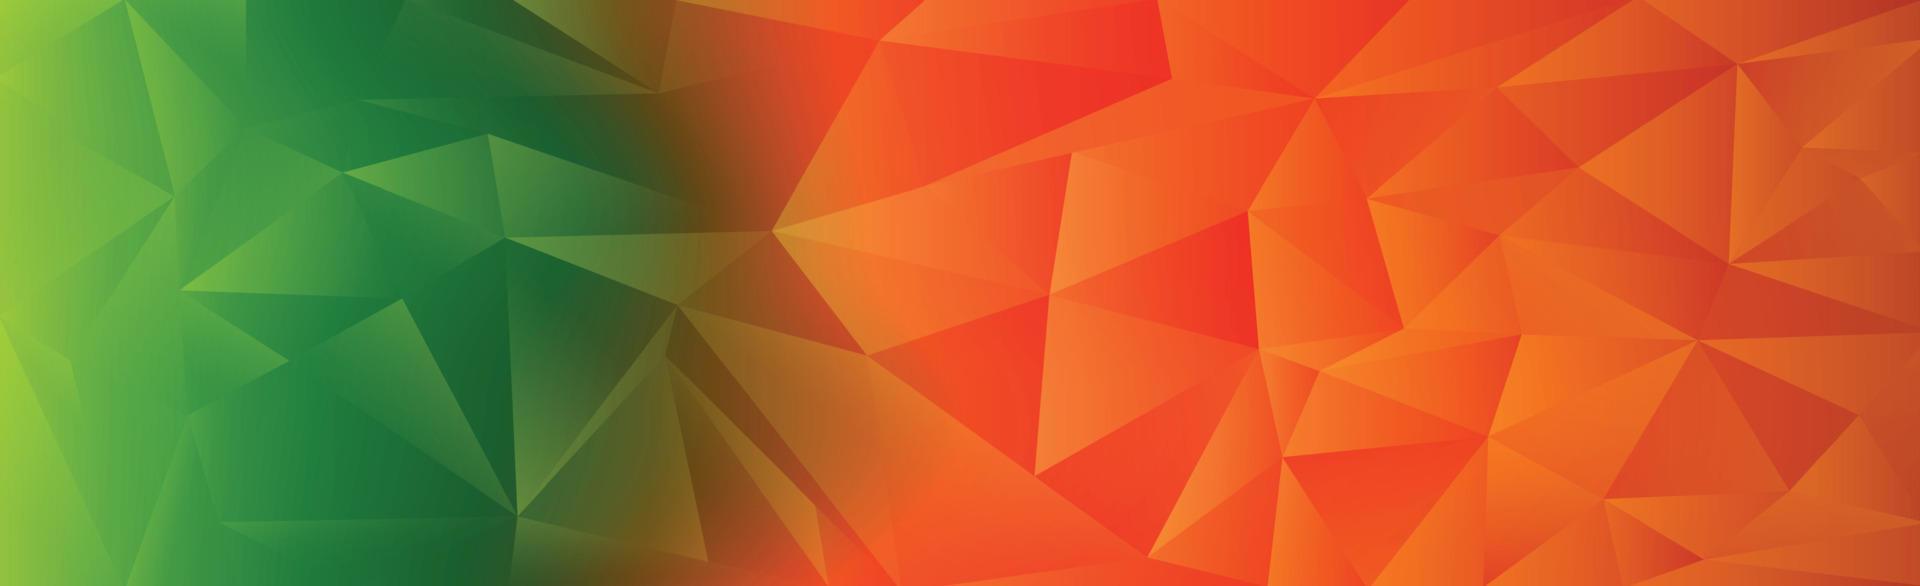 gradiente laranja vermelho de fundo web abstrato panorâmico - vetor